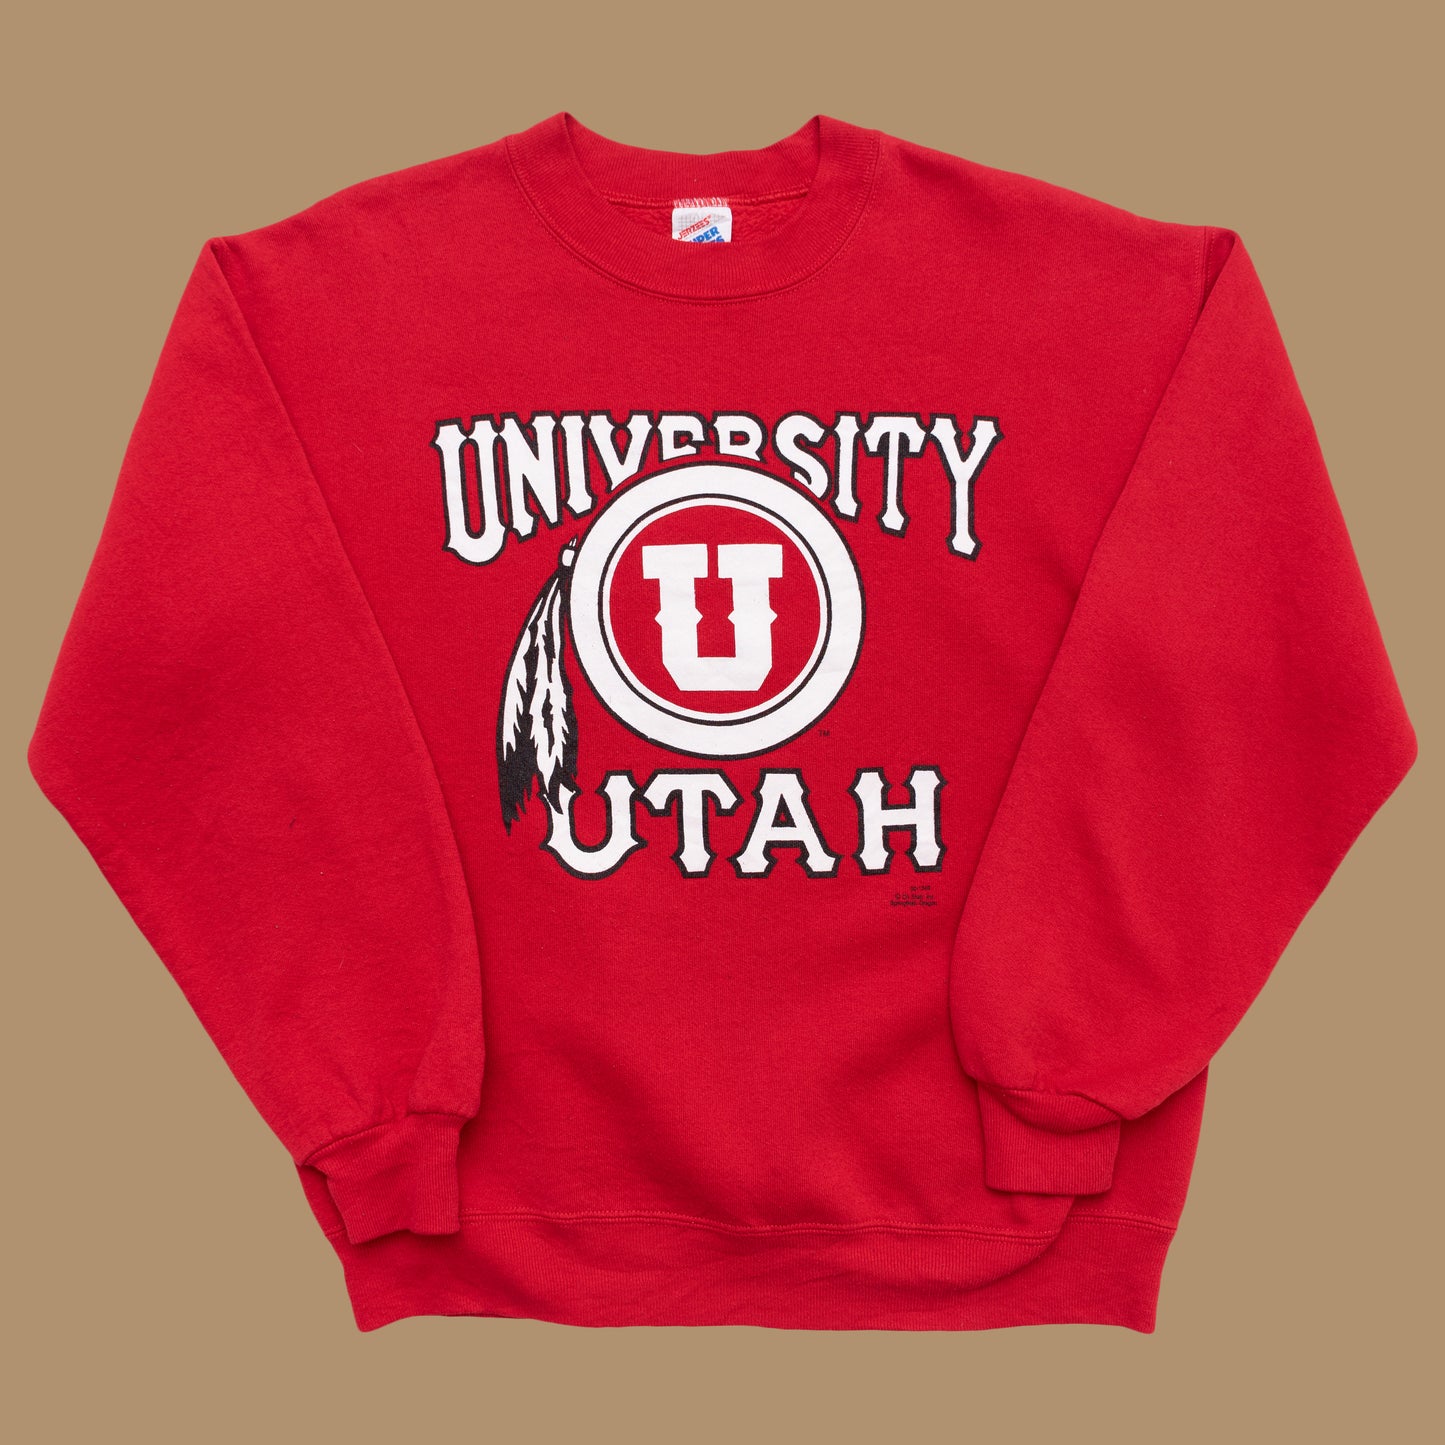 Utah University Sweater, M